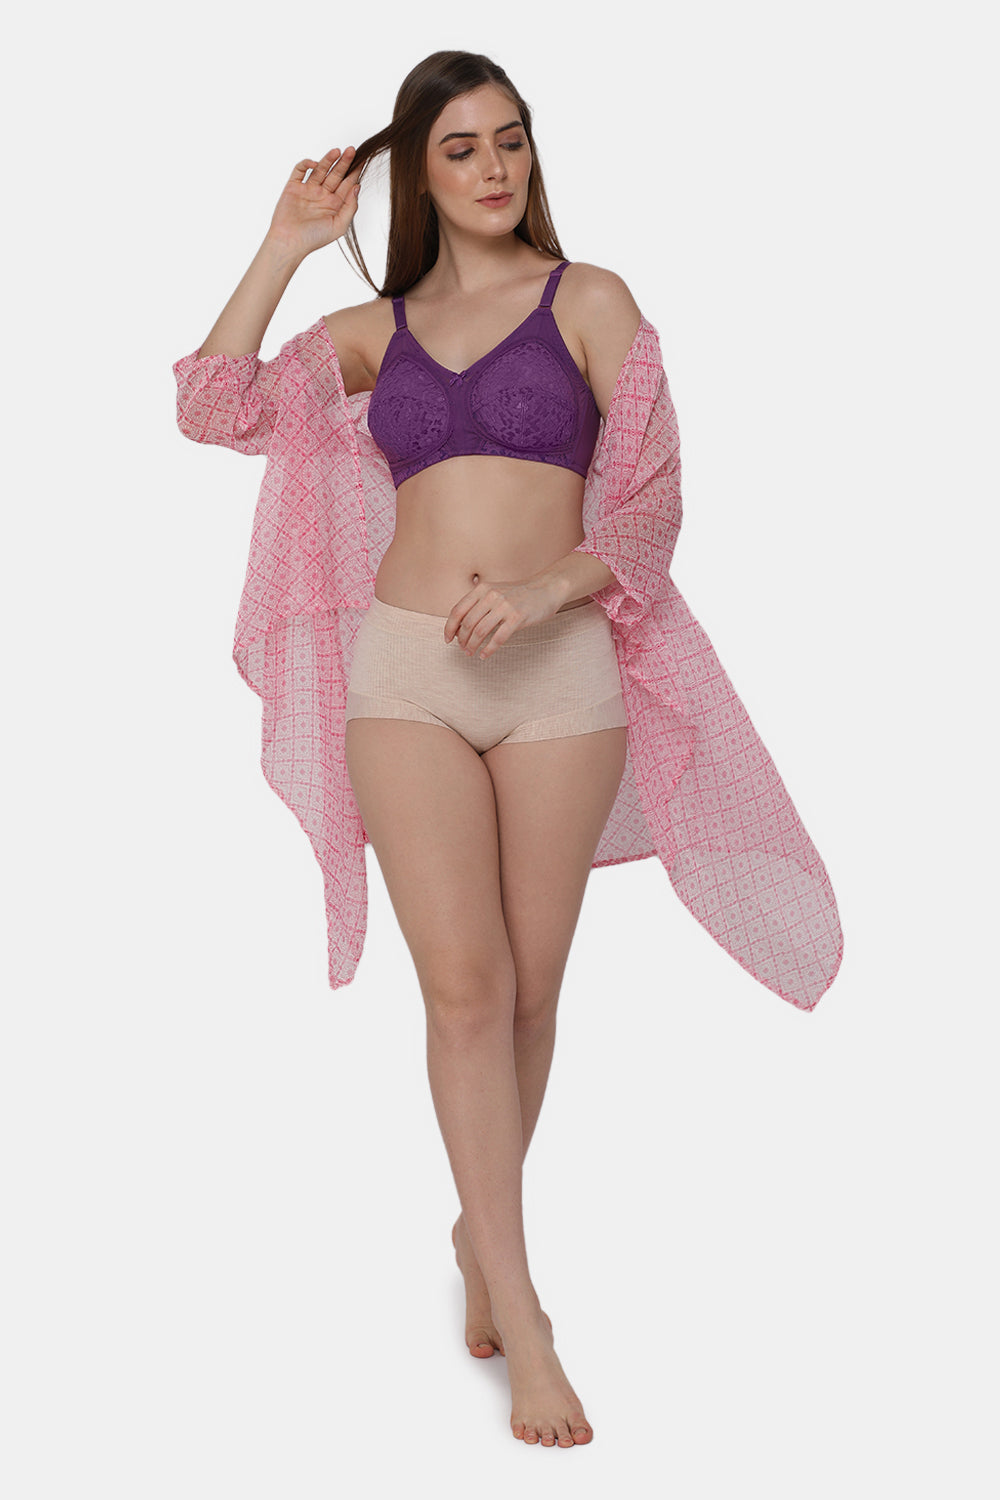 Flipkart Women Panties Combo Review, Flipkart Cotton Panty, Size &  Quality Check